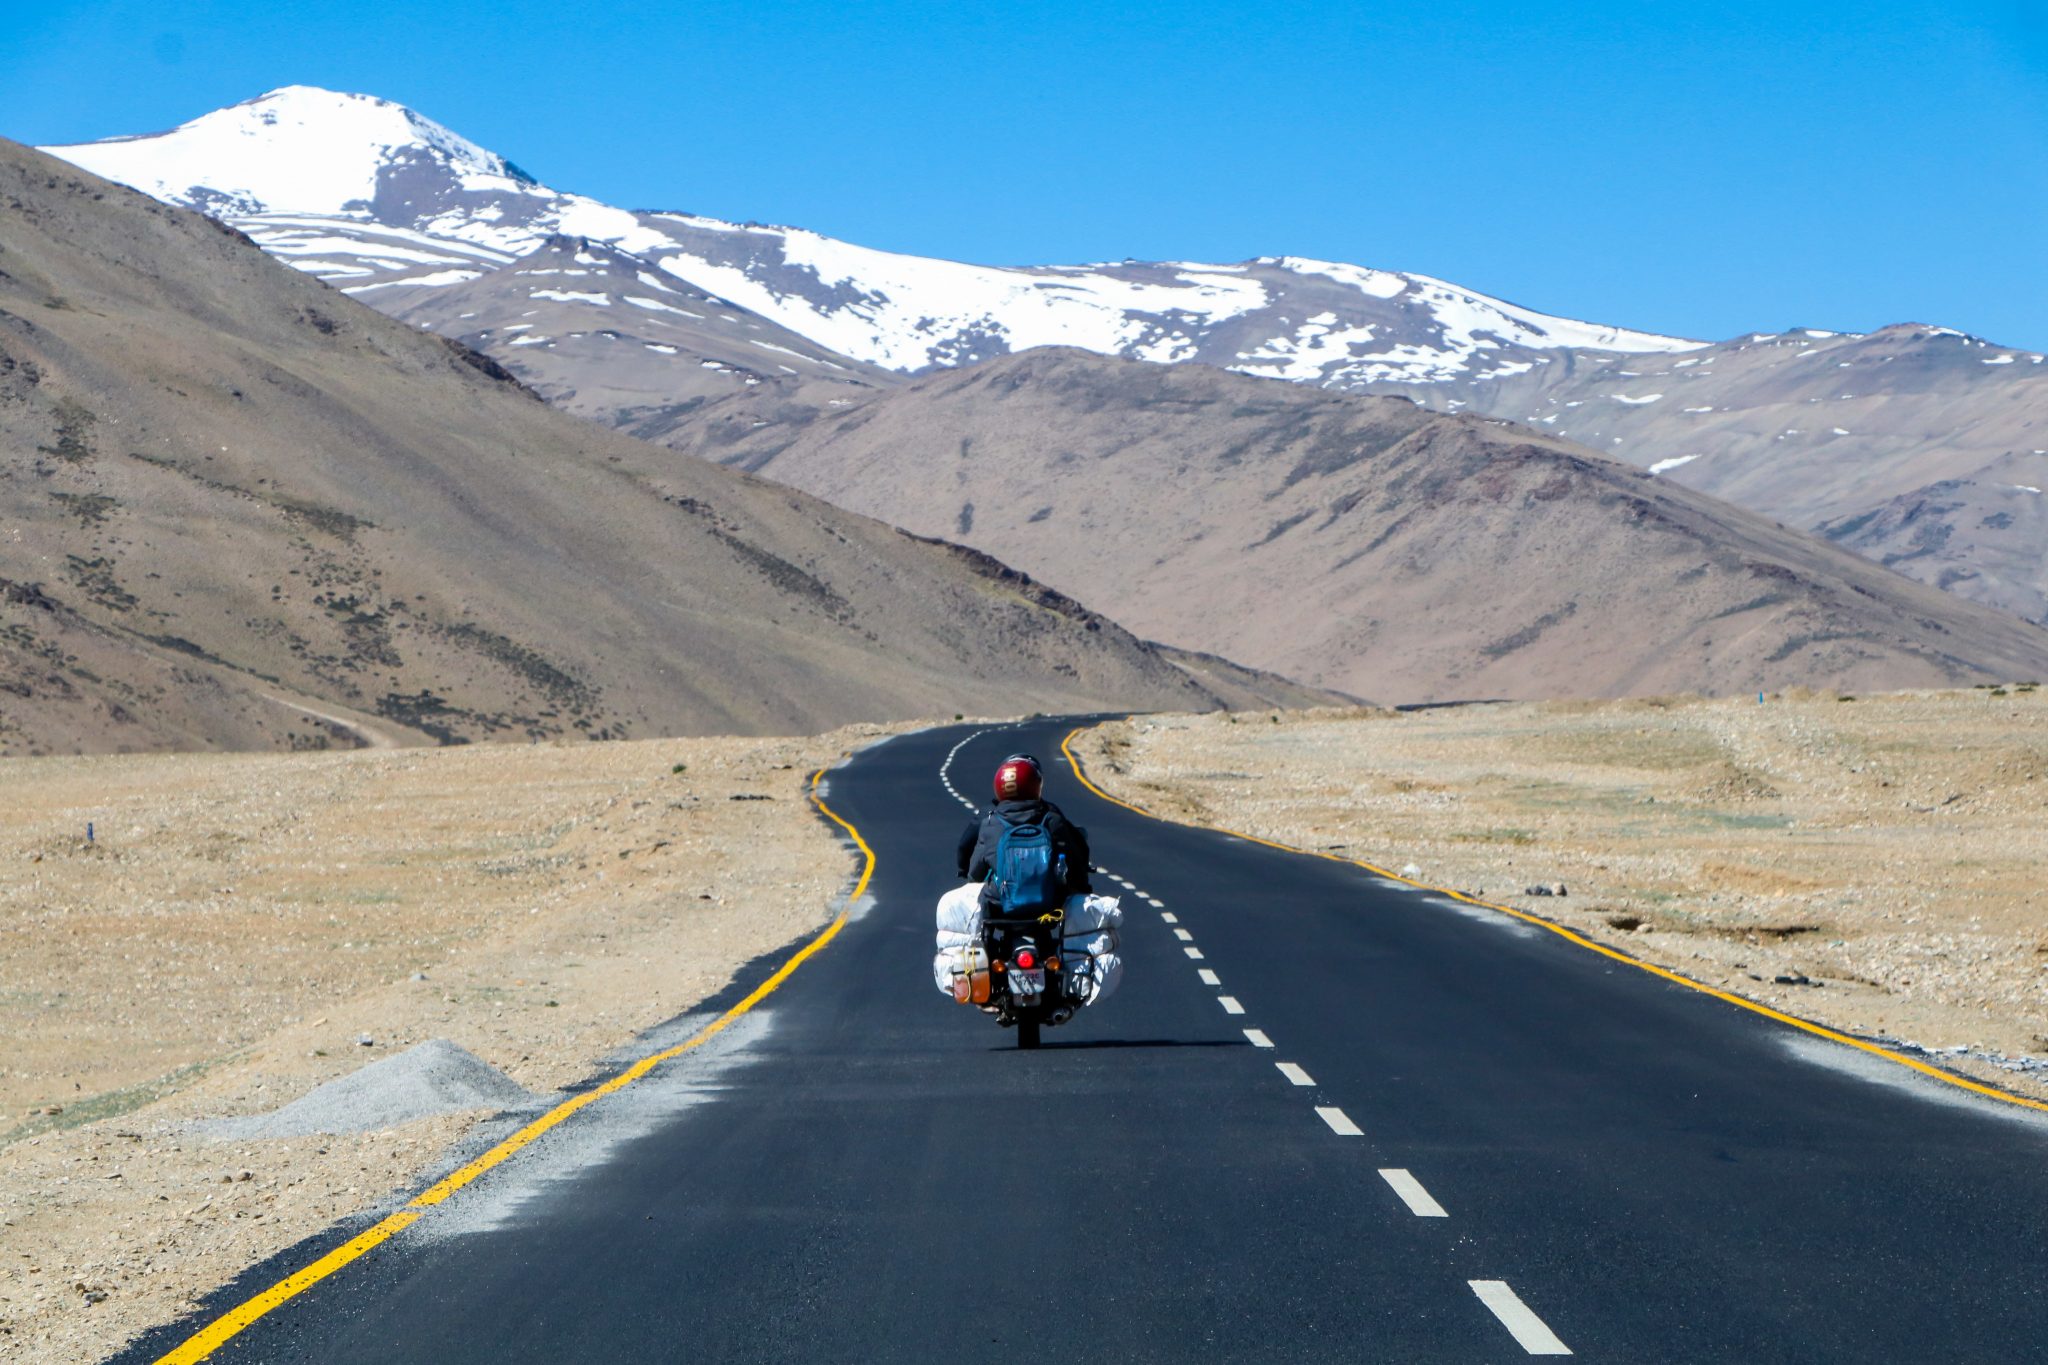 ladakh bike trip days